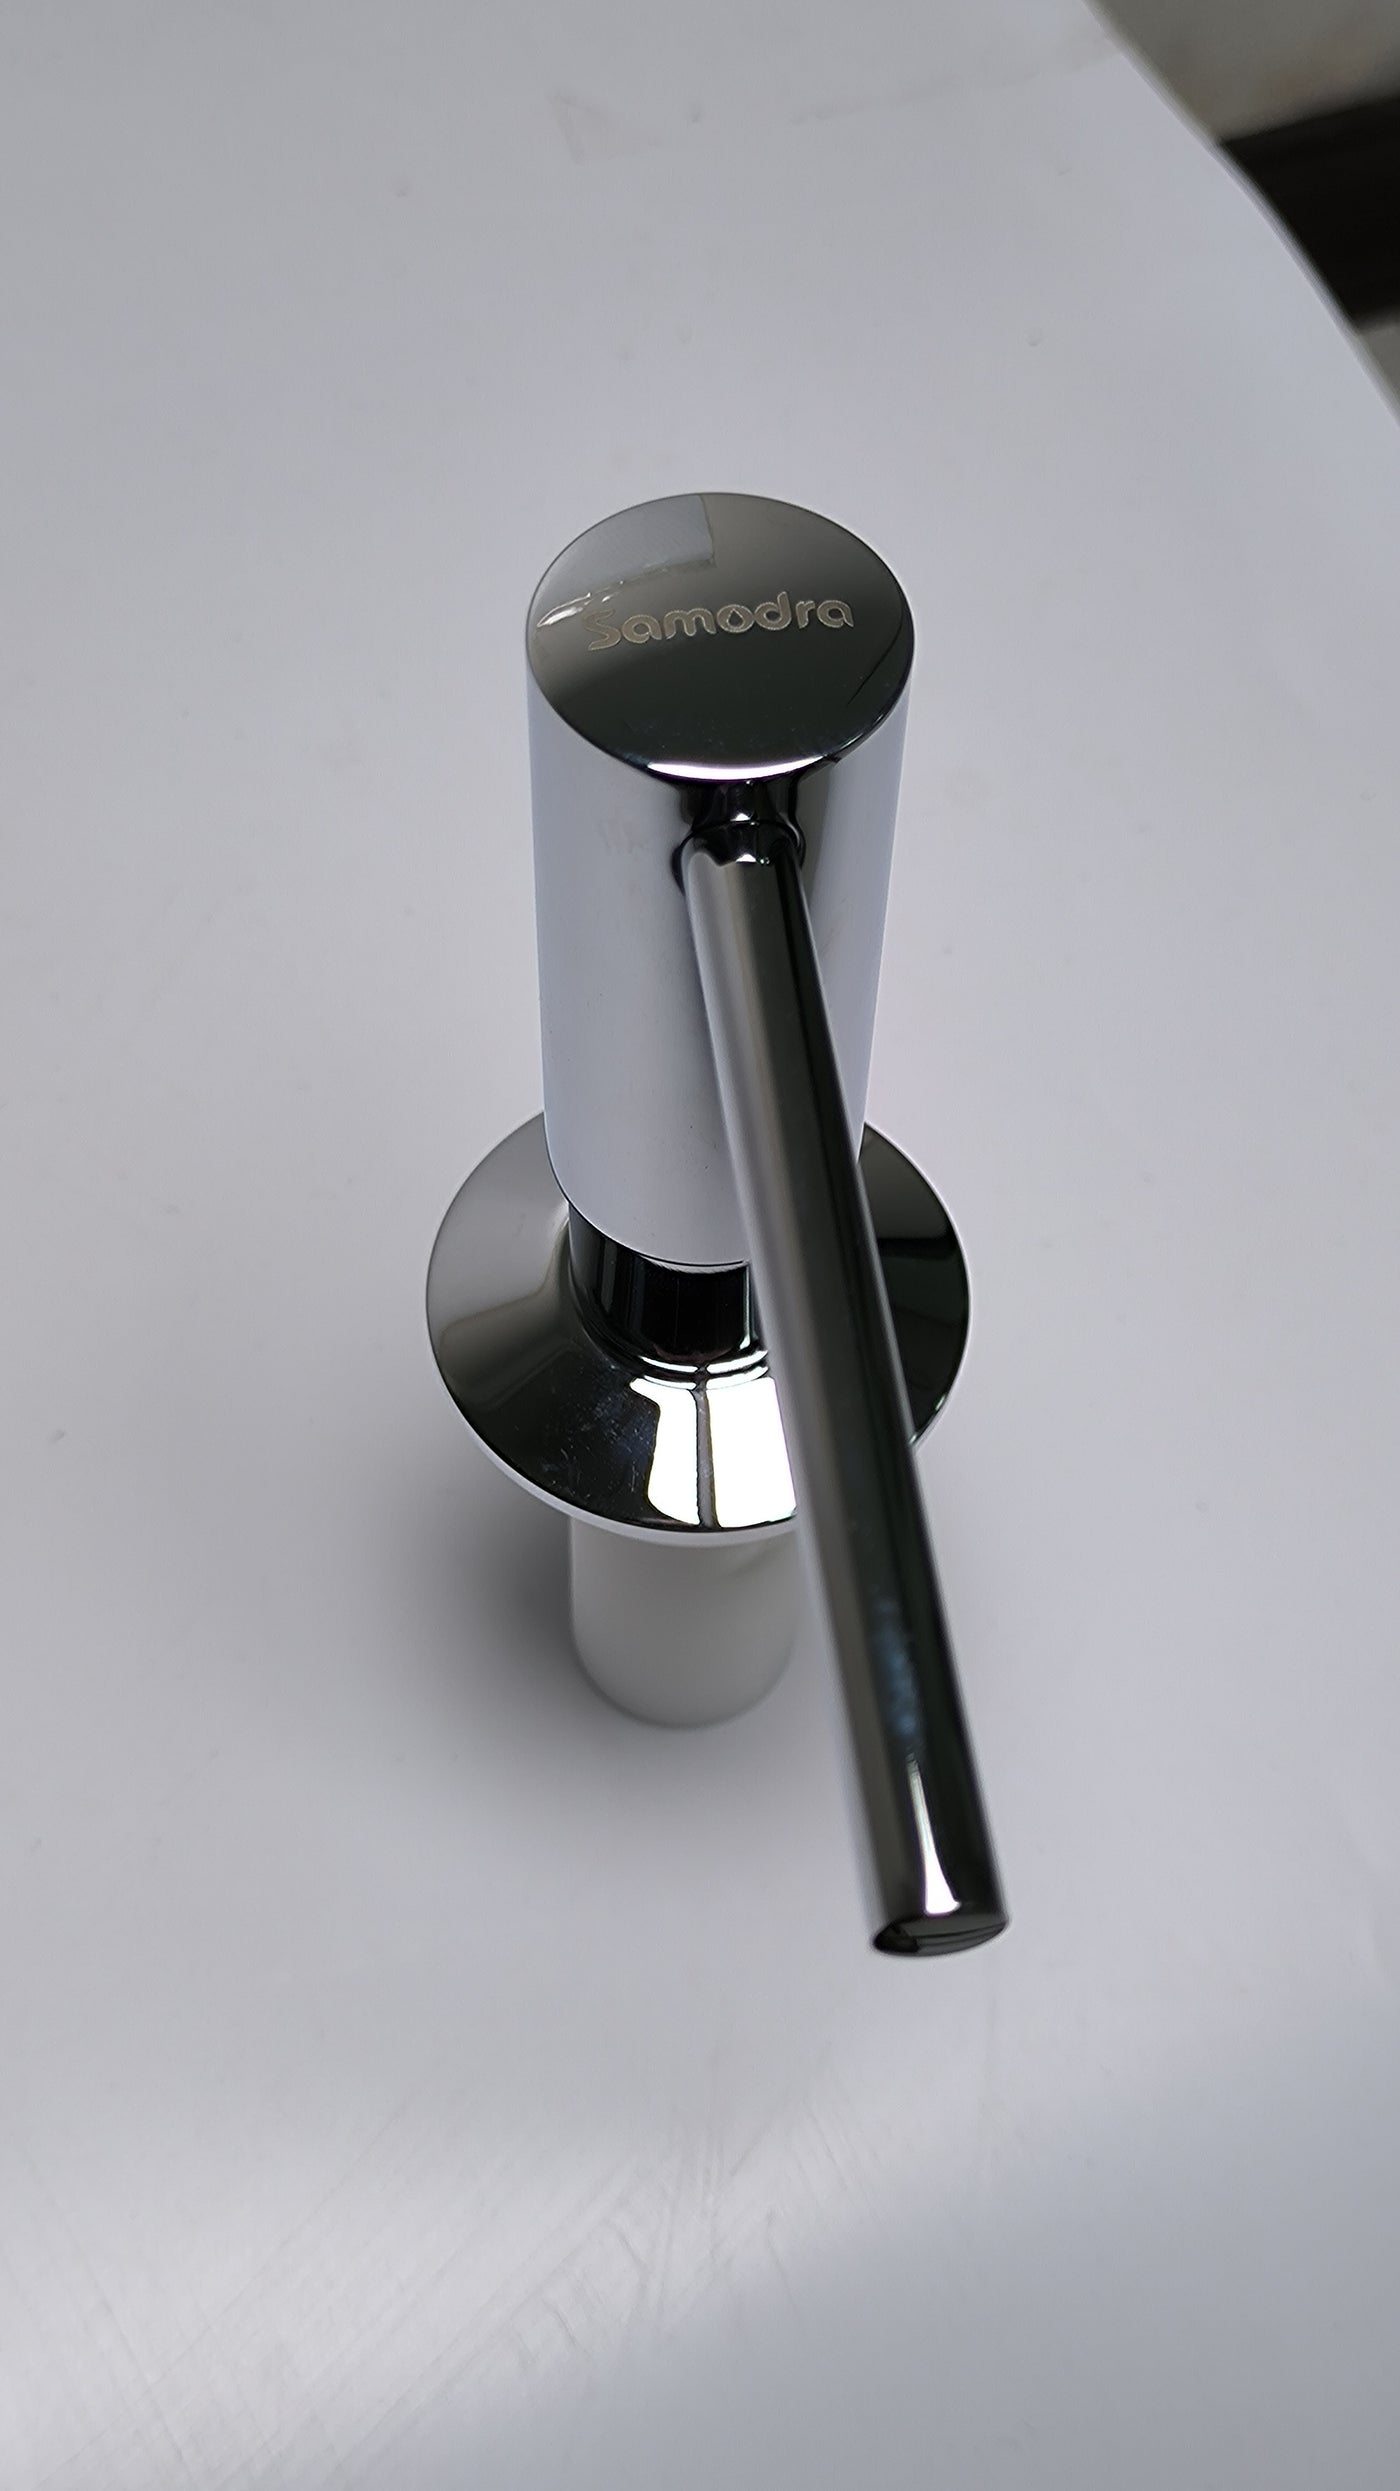 Samodra Sink Soap Dispenser, Metal Pump Head Liquid Lotion Countertop Kitchen Bathroom Soap Dispenser with 17 OZ PET Bottle (Chrome)